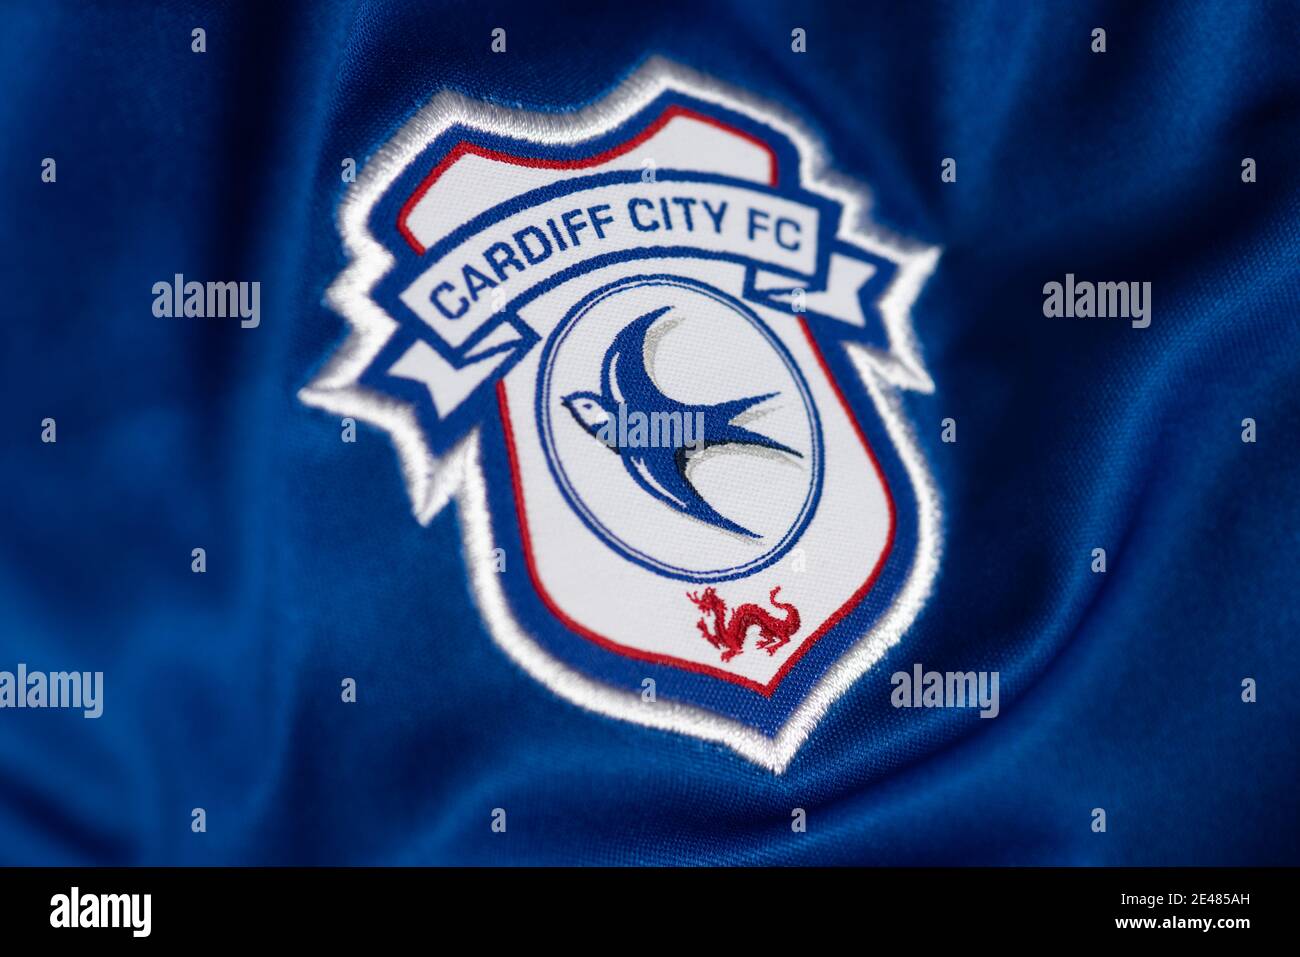 Cardiff City FC, Wales football team, blue background, AFC